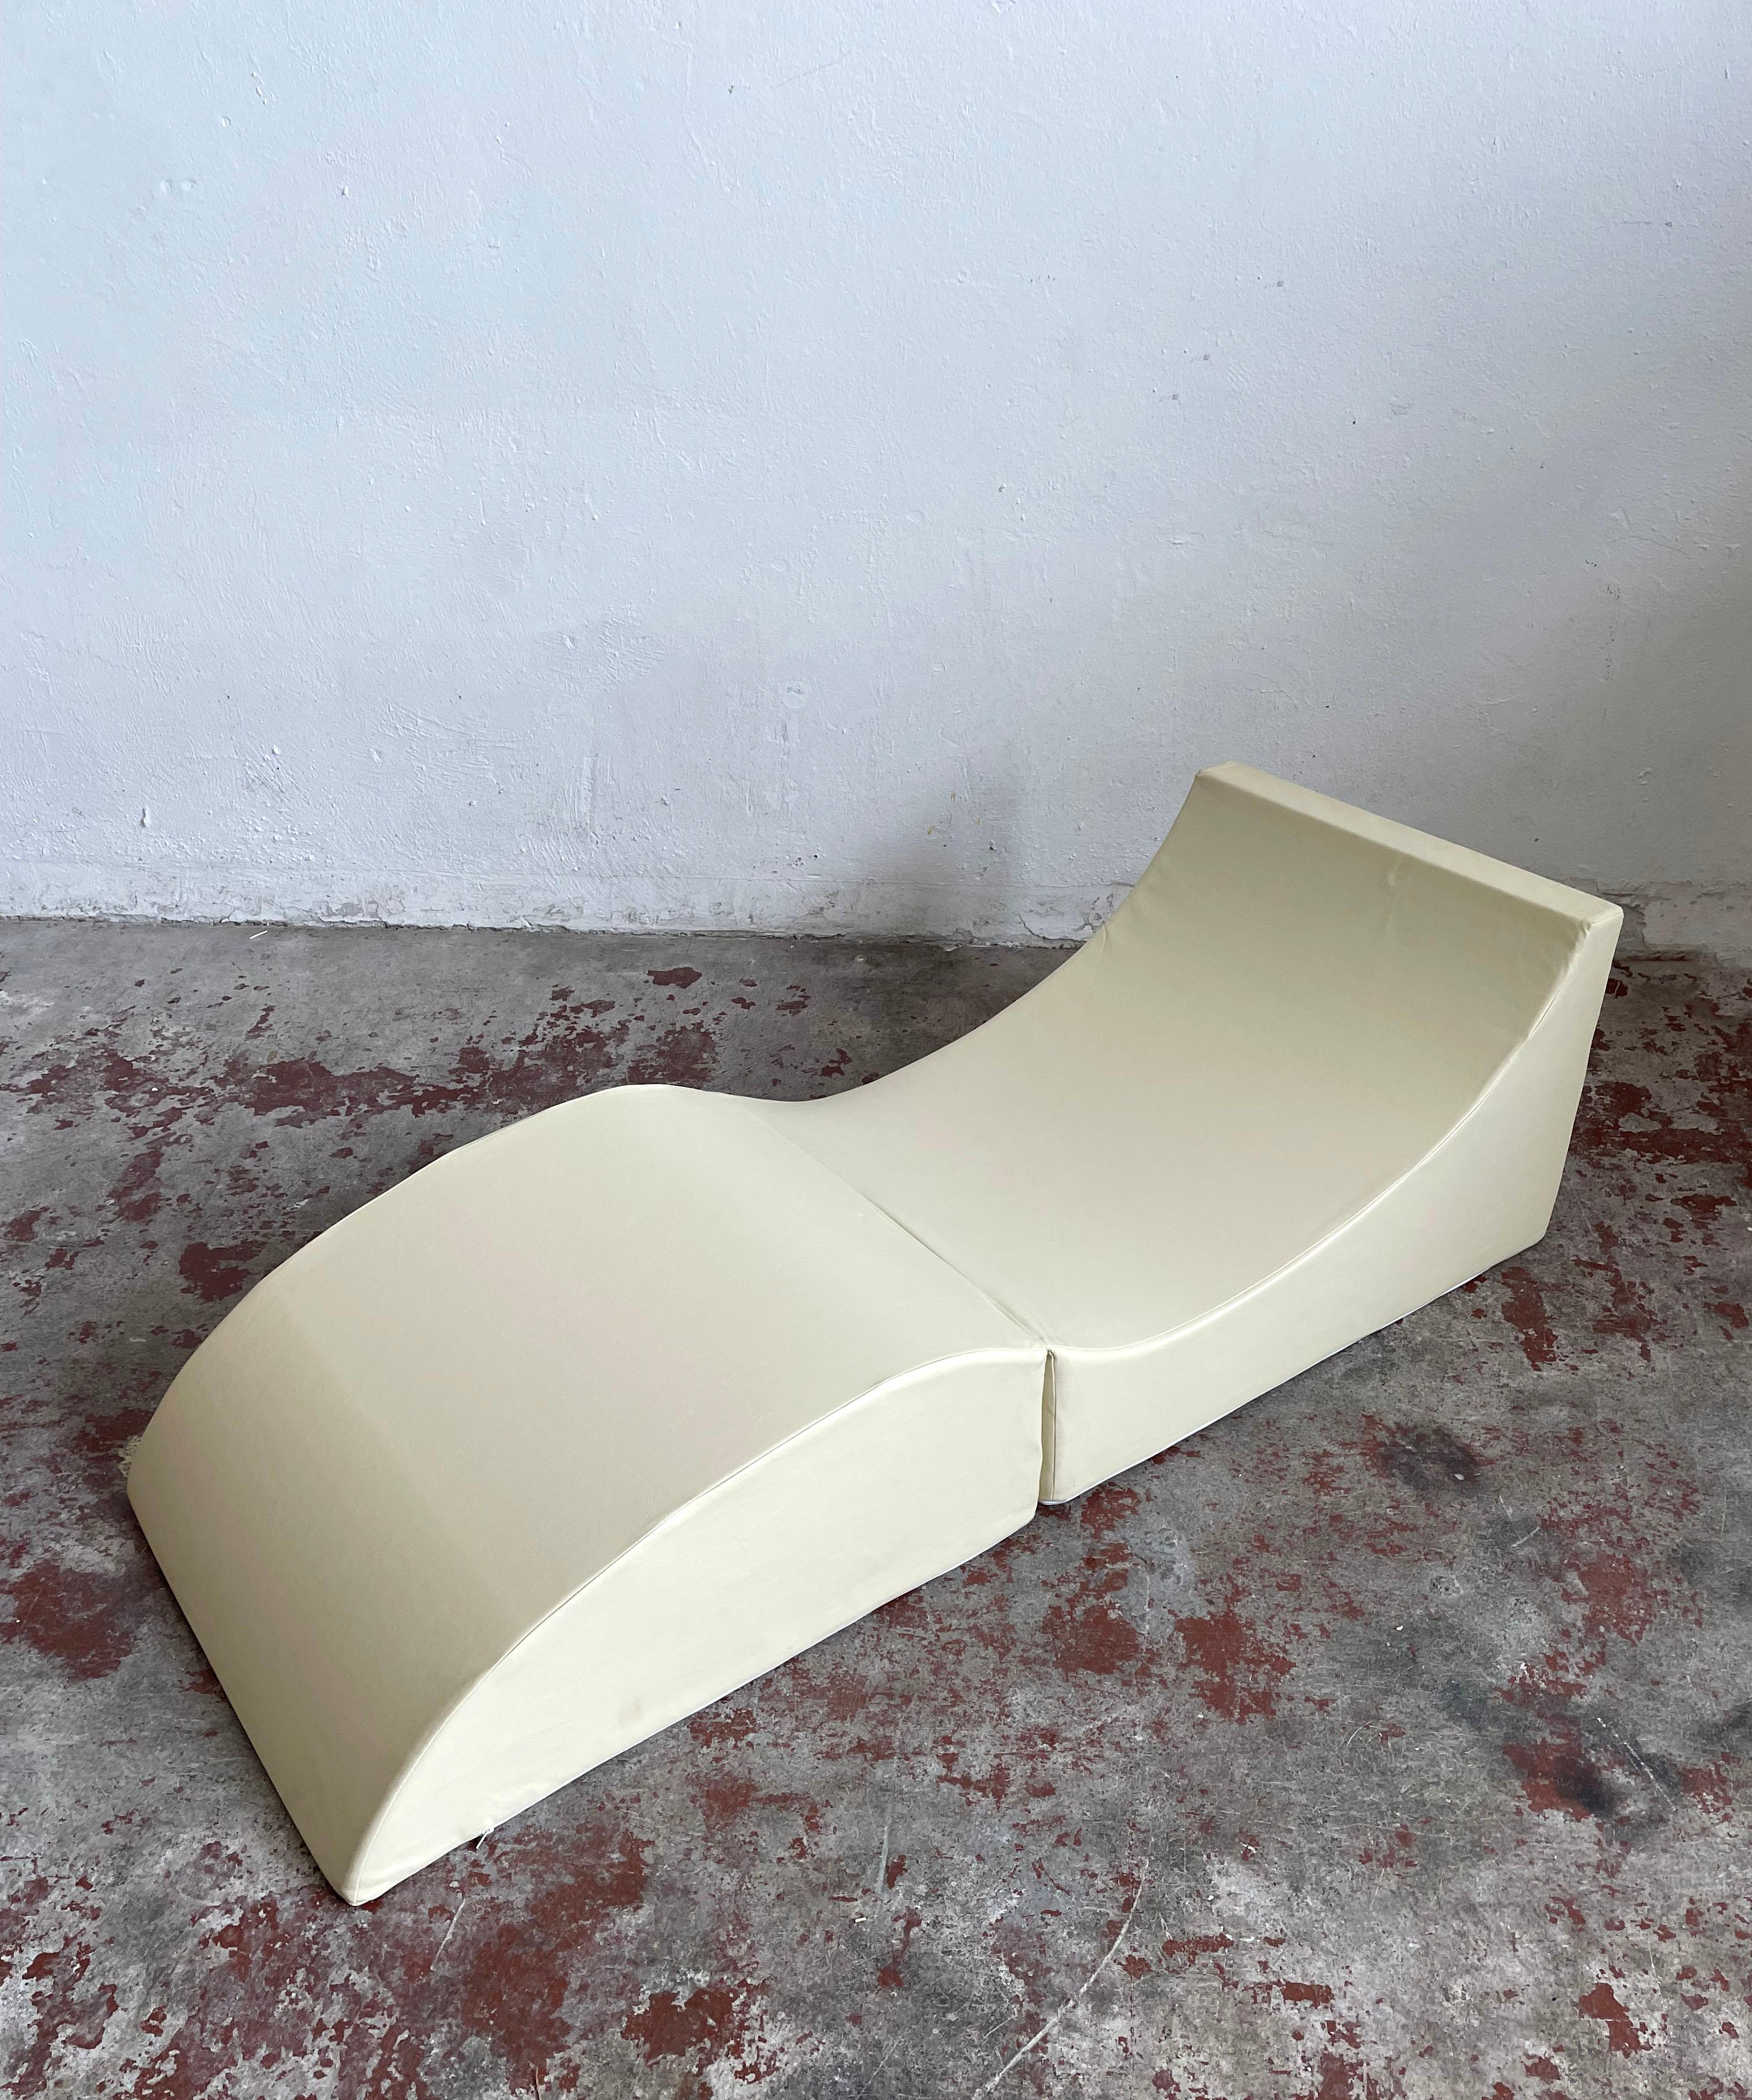 Minimalist Modernist Sculptural Italian Faux Leather Folding Lounge Chair Chaise Longue 70s